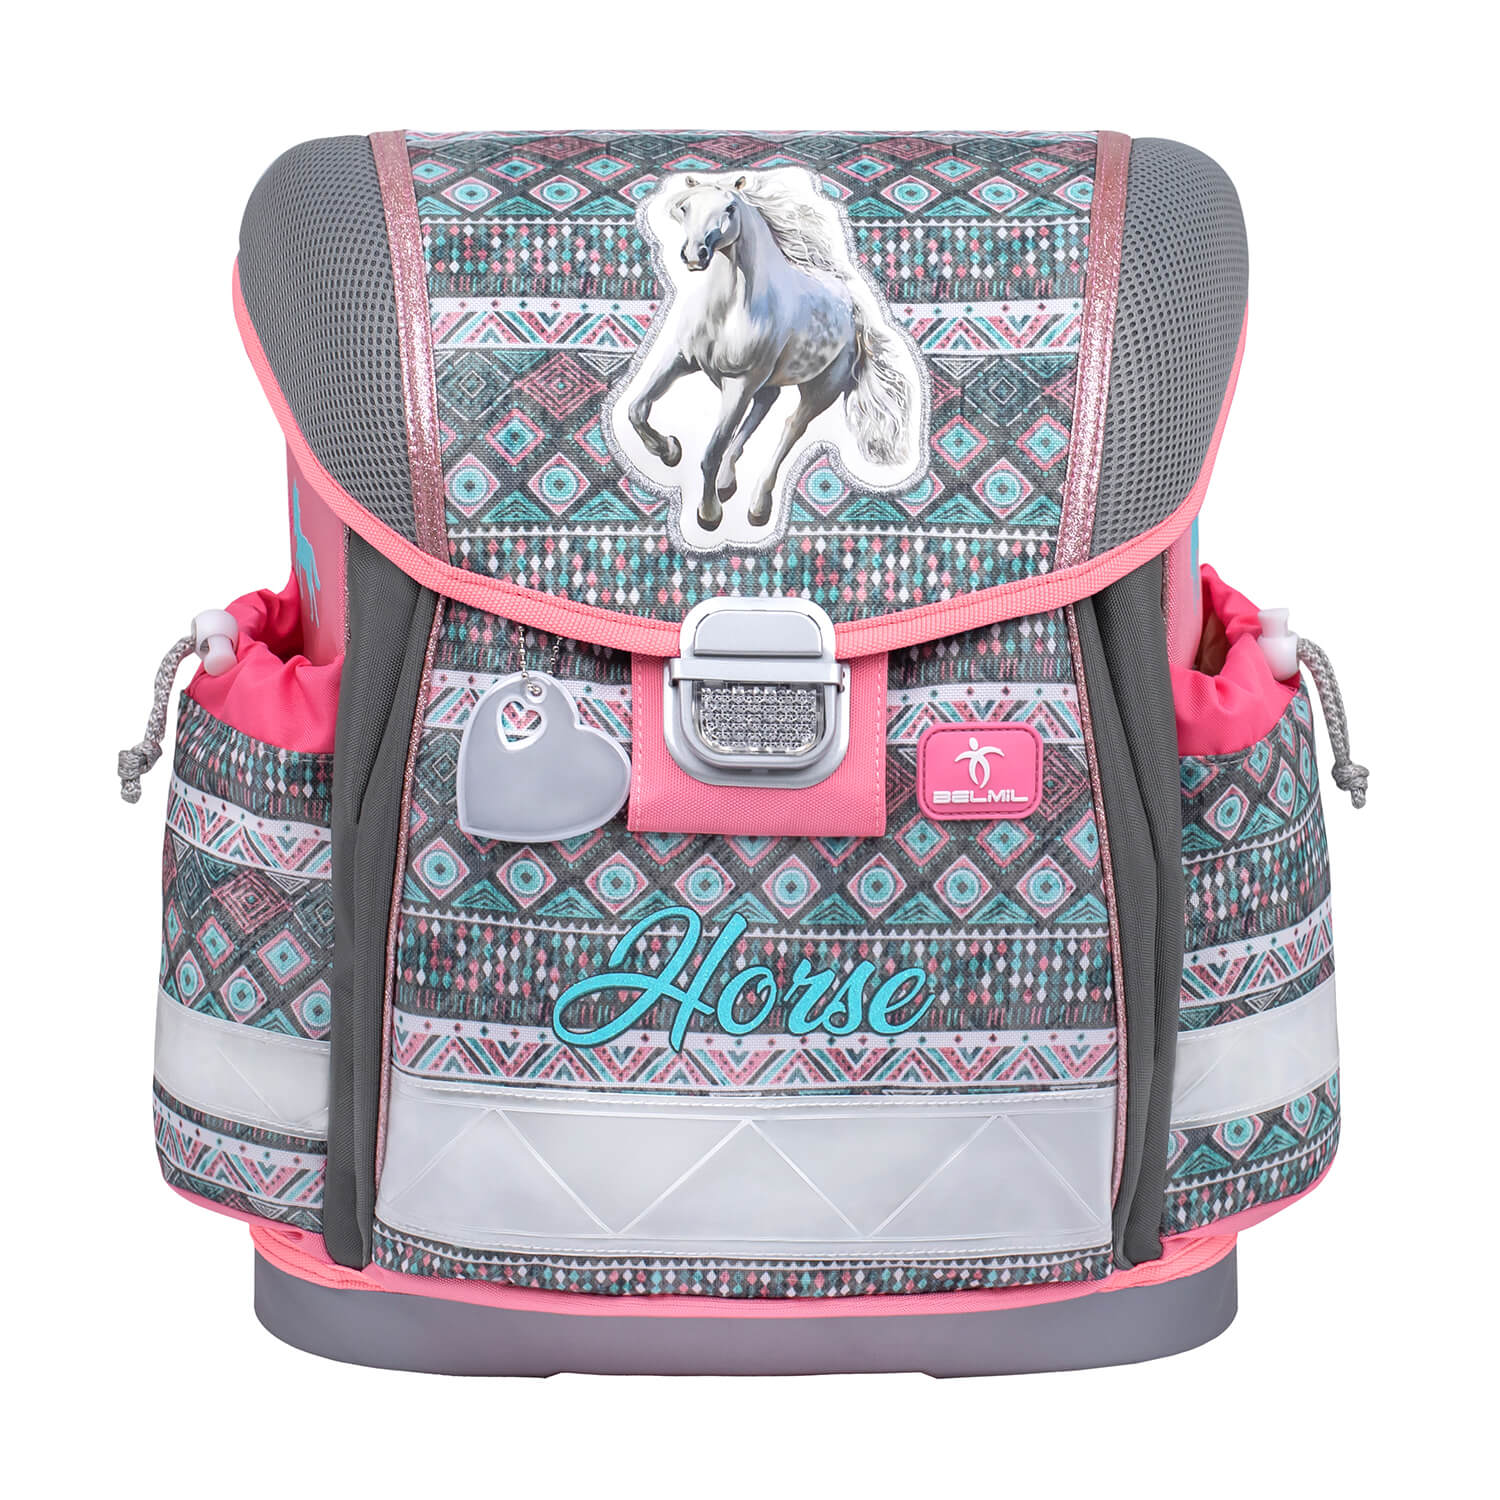 Classy Horse Aruba Blue schoolbag set 5 pcs with GRATIS keychain